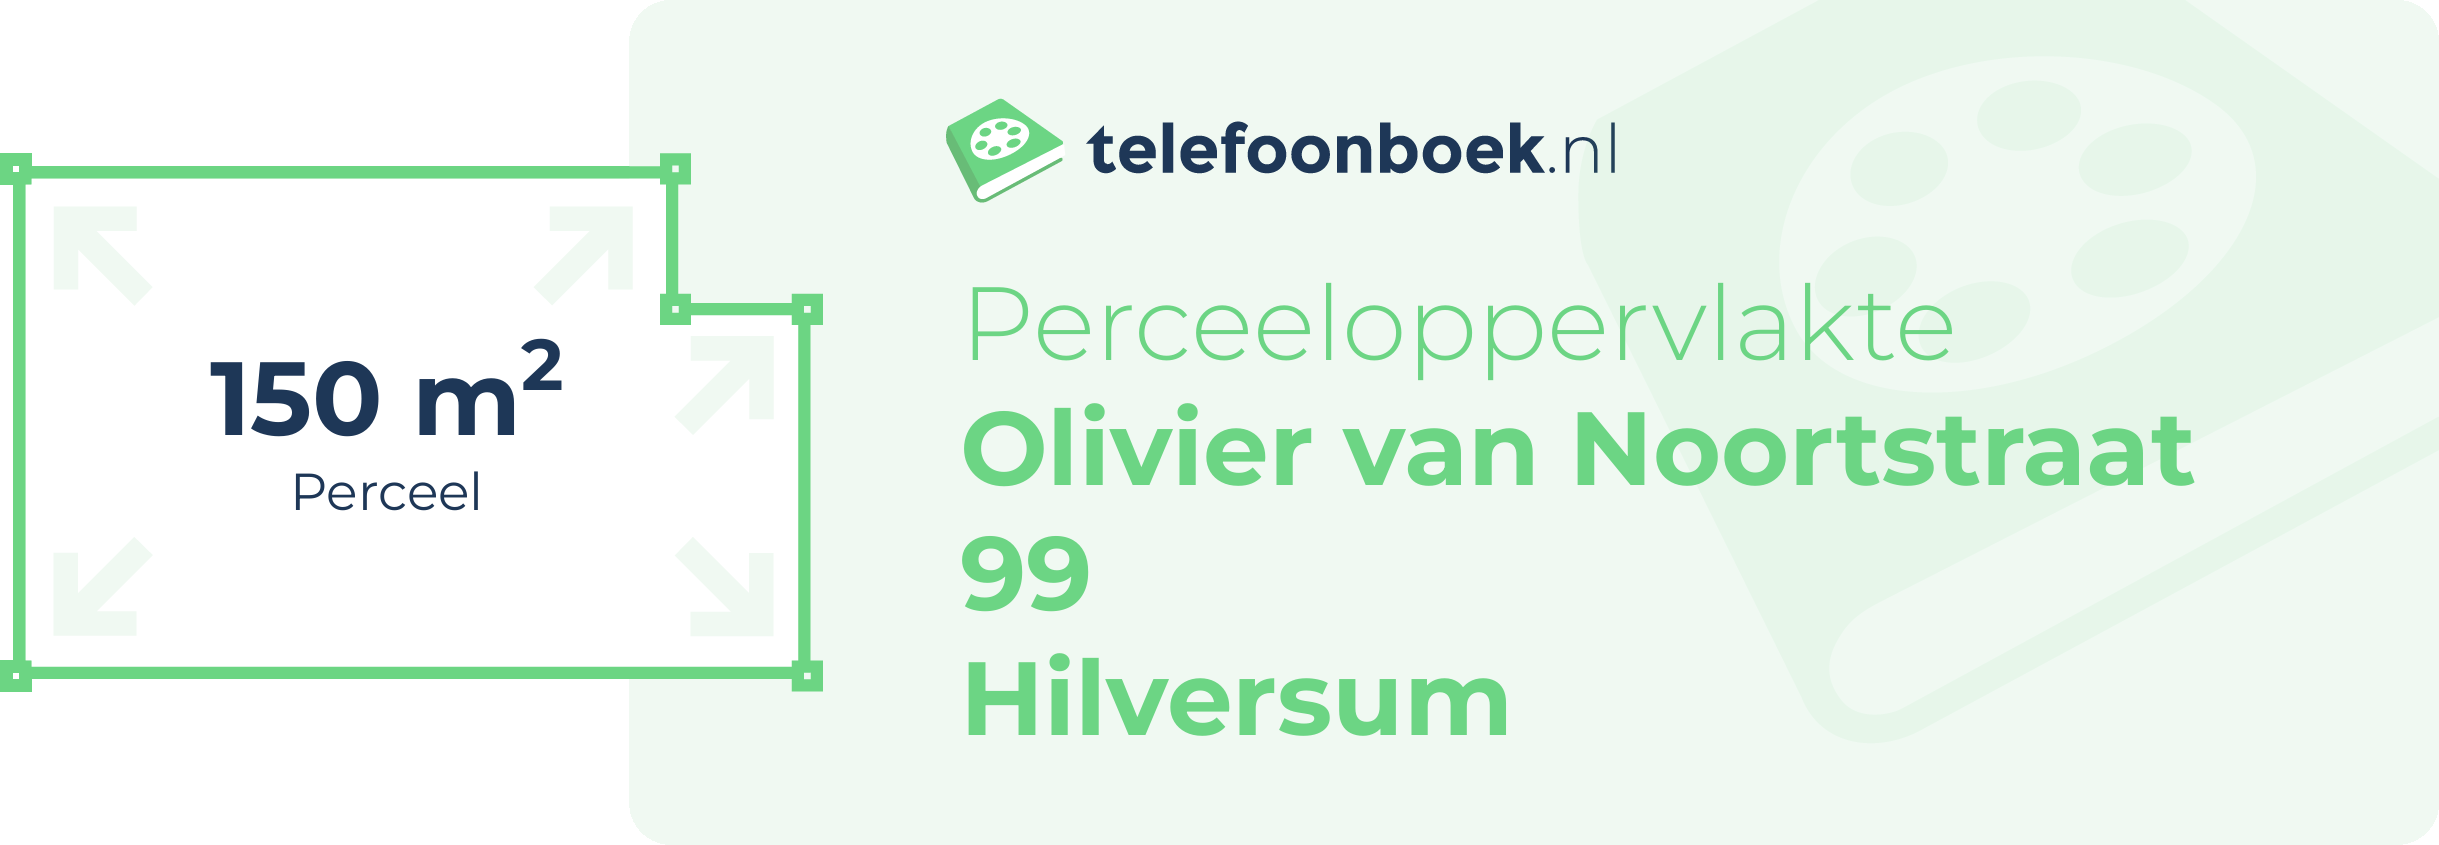 Perceeloppervlakte Olivier Van Noortstraat 99 Hilversum